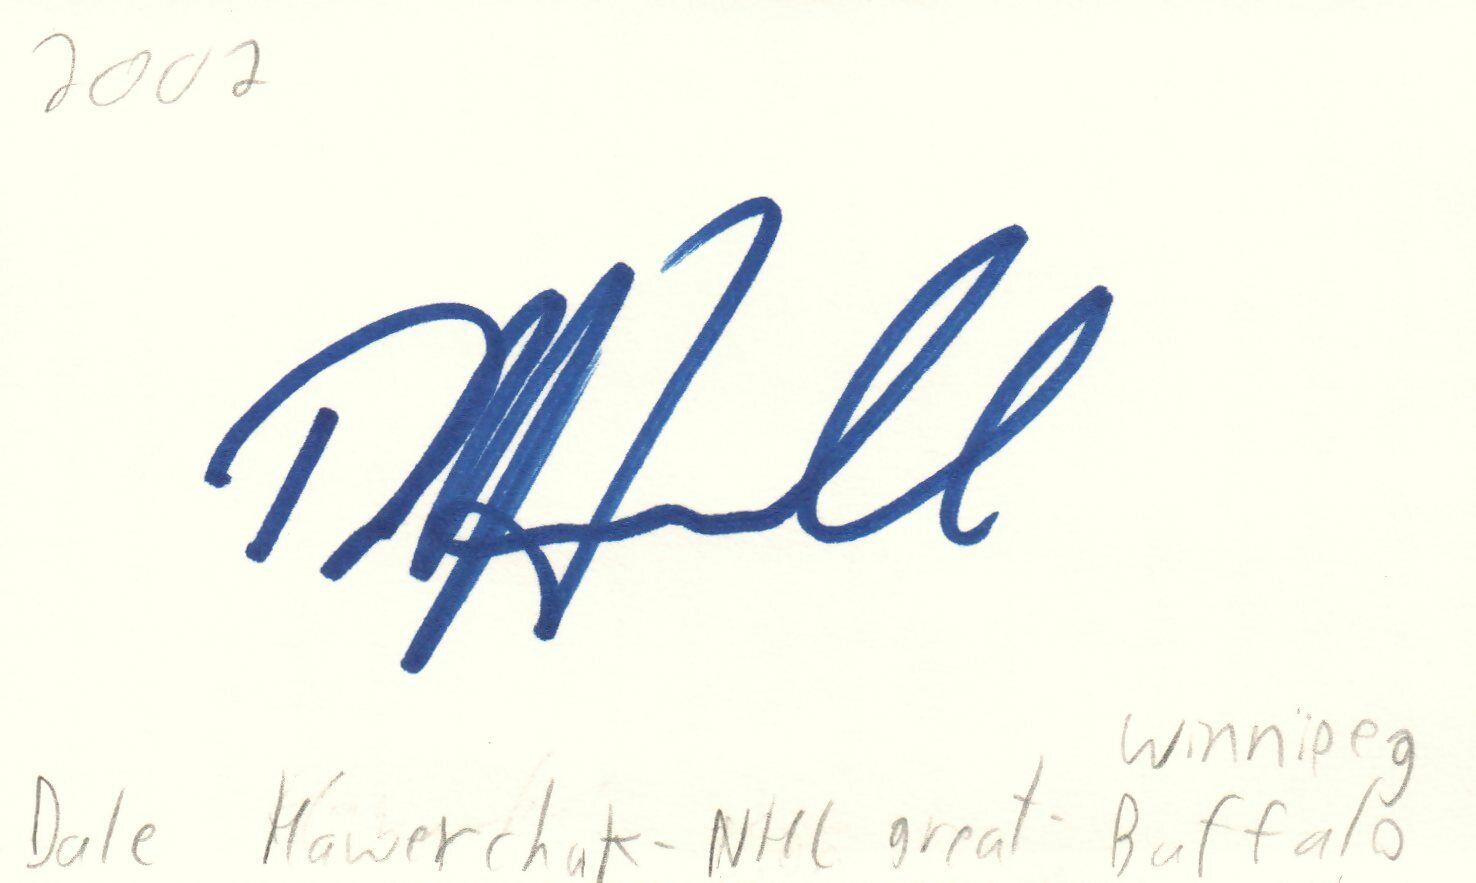 Dale Hawerchuk Buffalo Winnipeg Nhl Great Hockey Autographed Signed Index Card